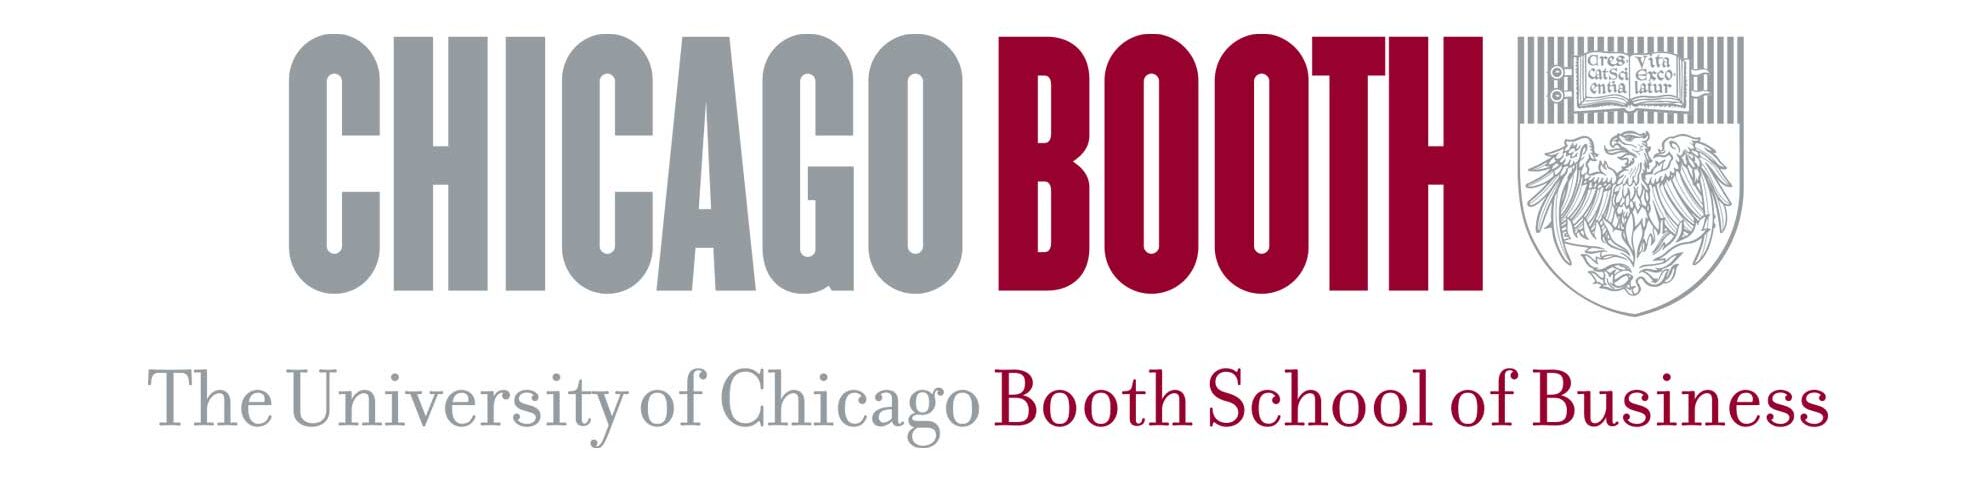 University of Chicago (Booth) logo